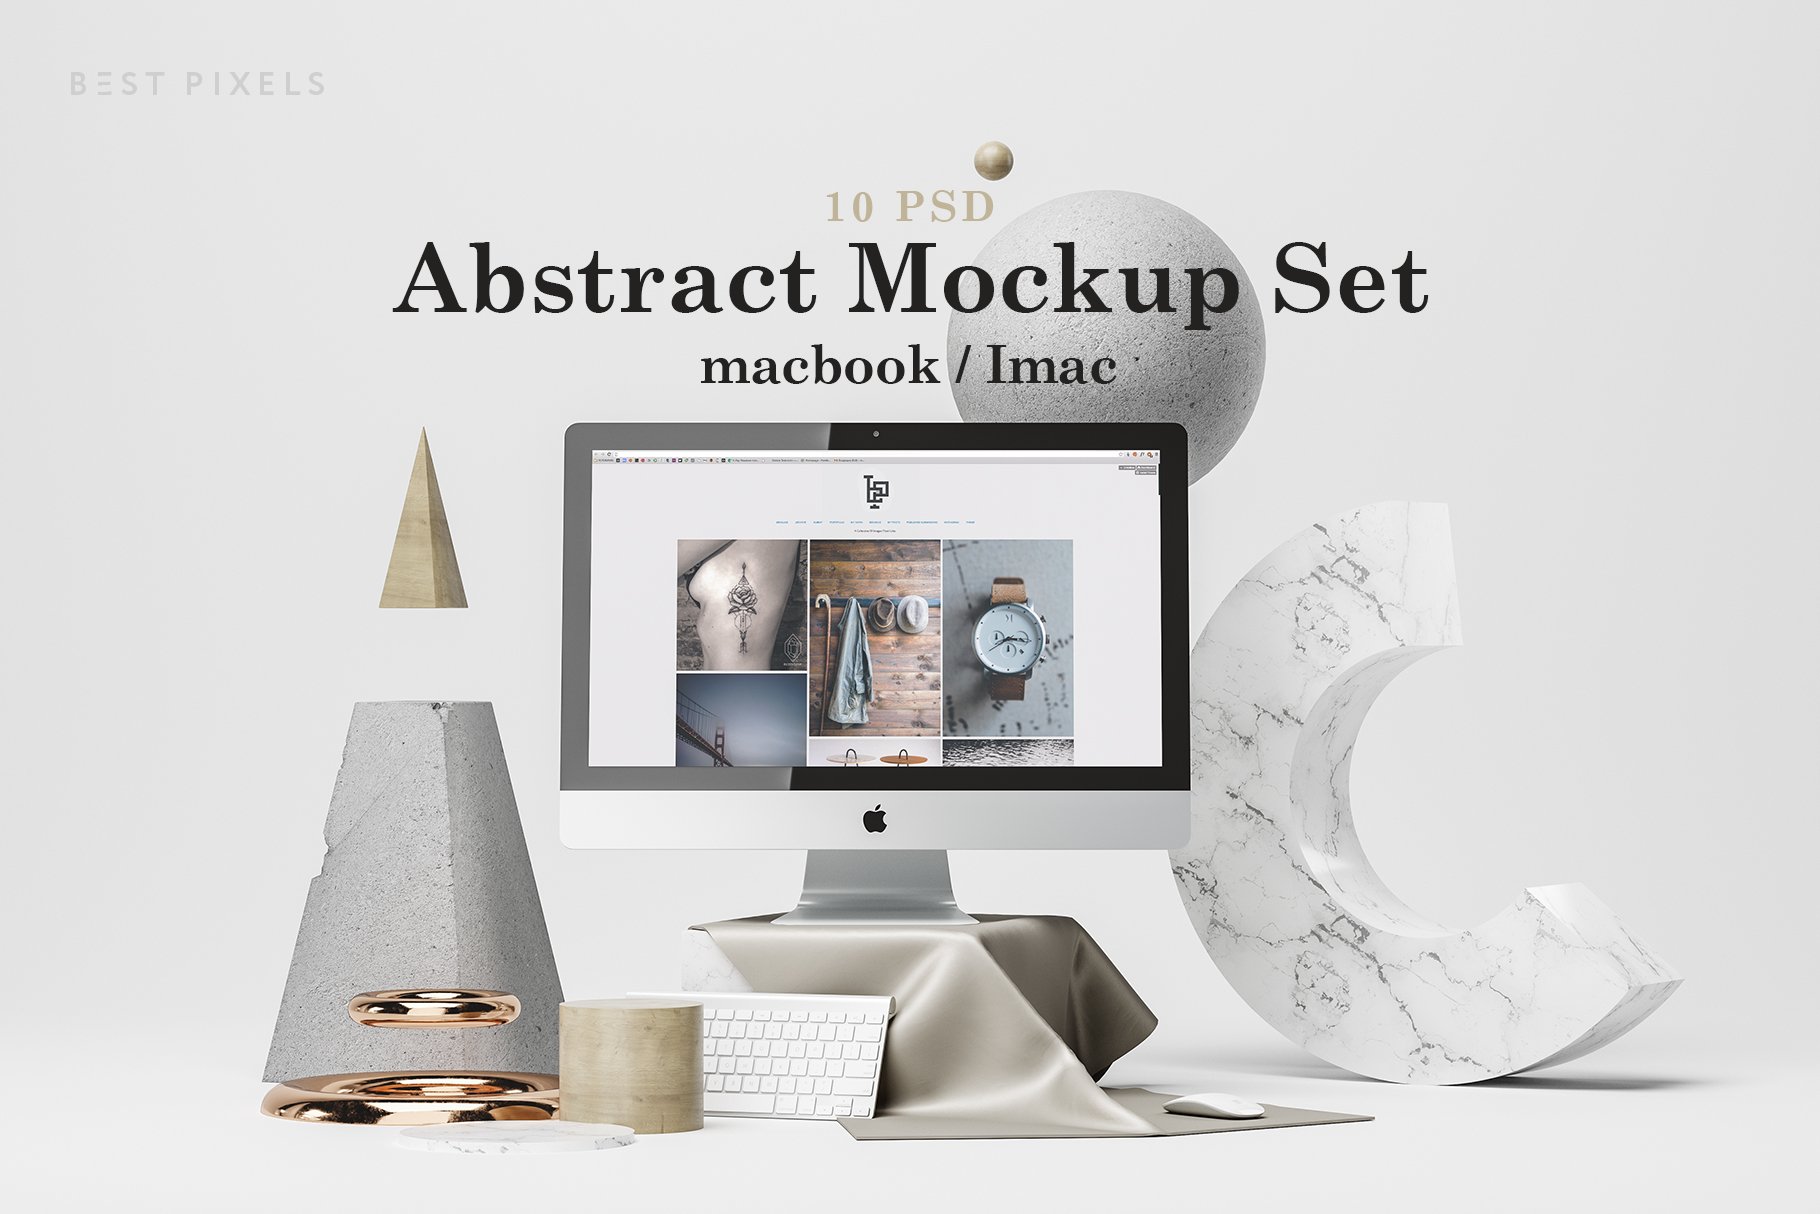 Abstract Mockup Set cover image.